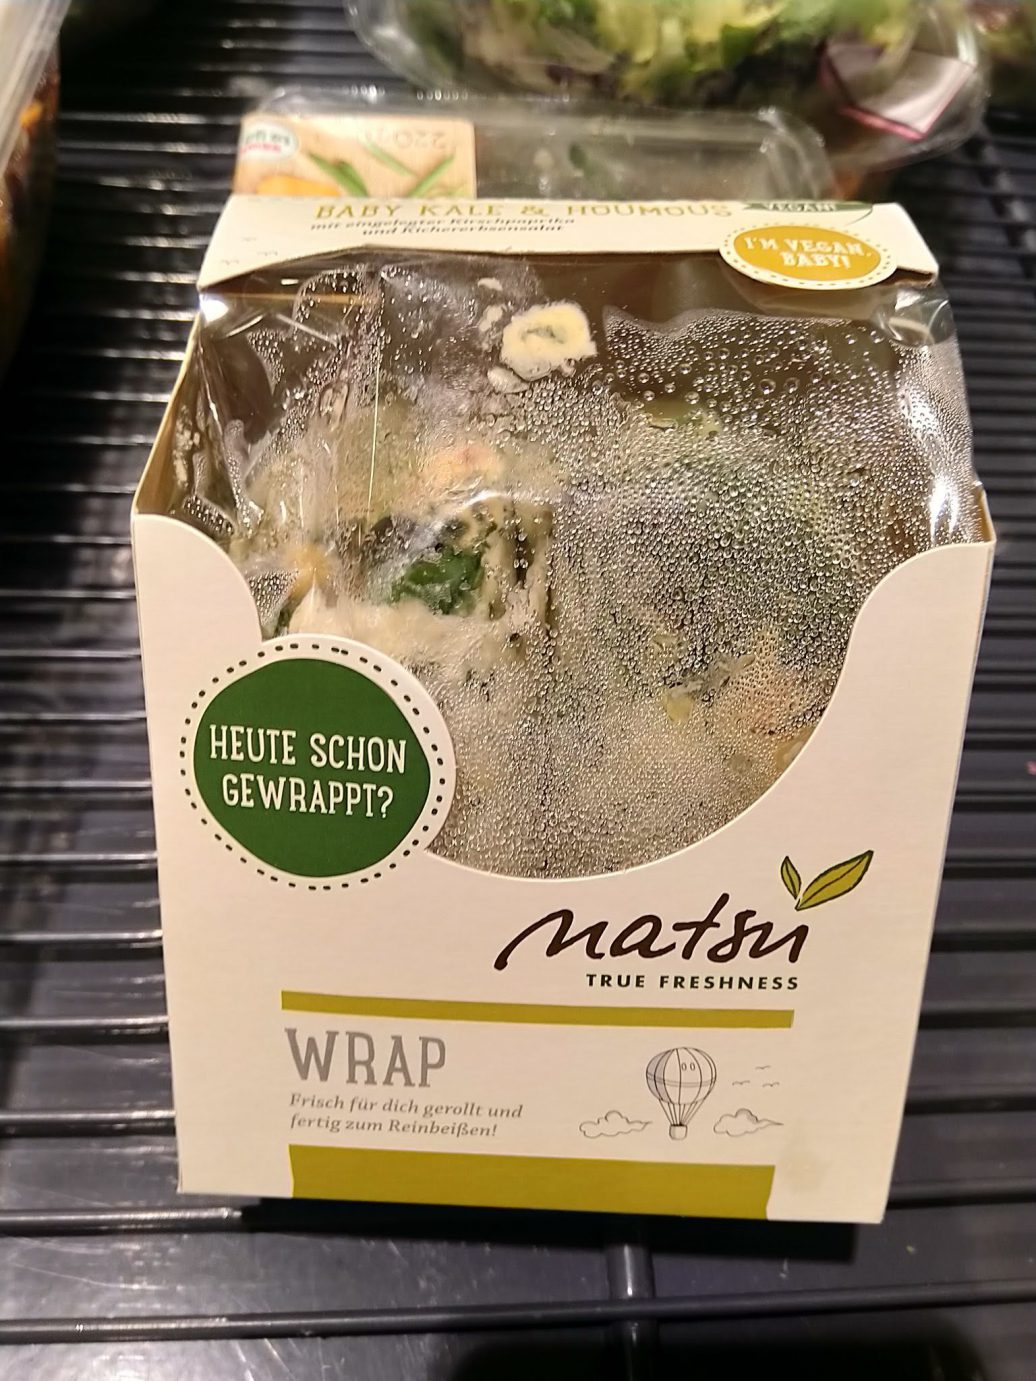 Natsu Foods